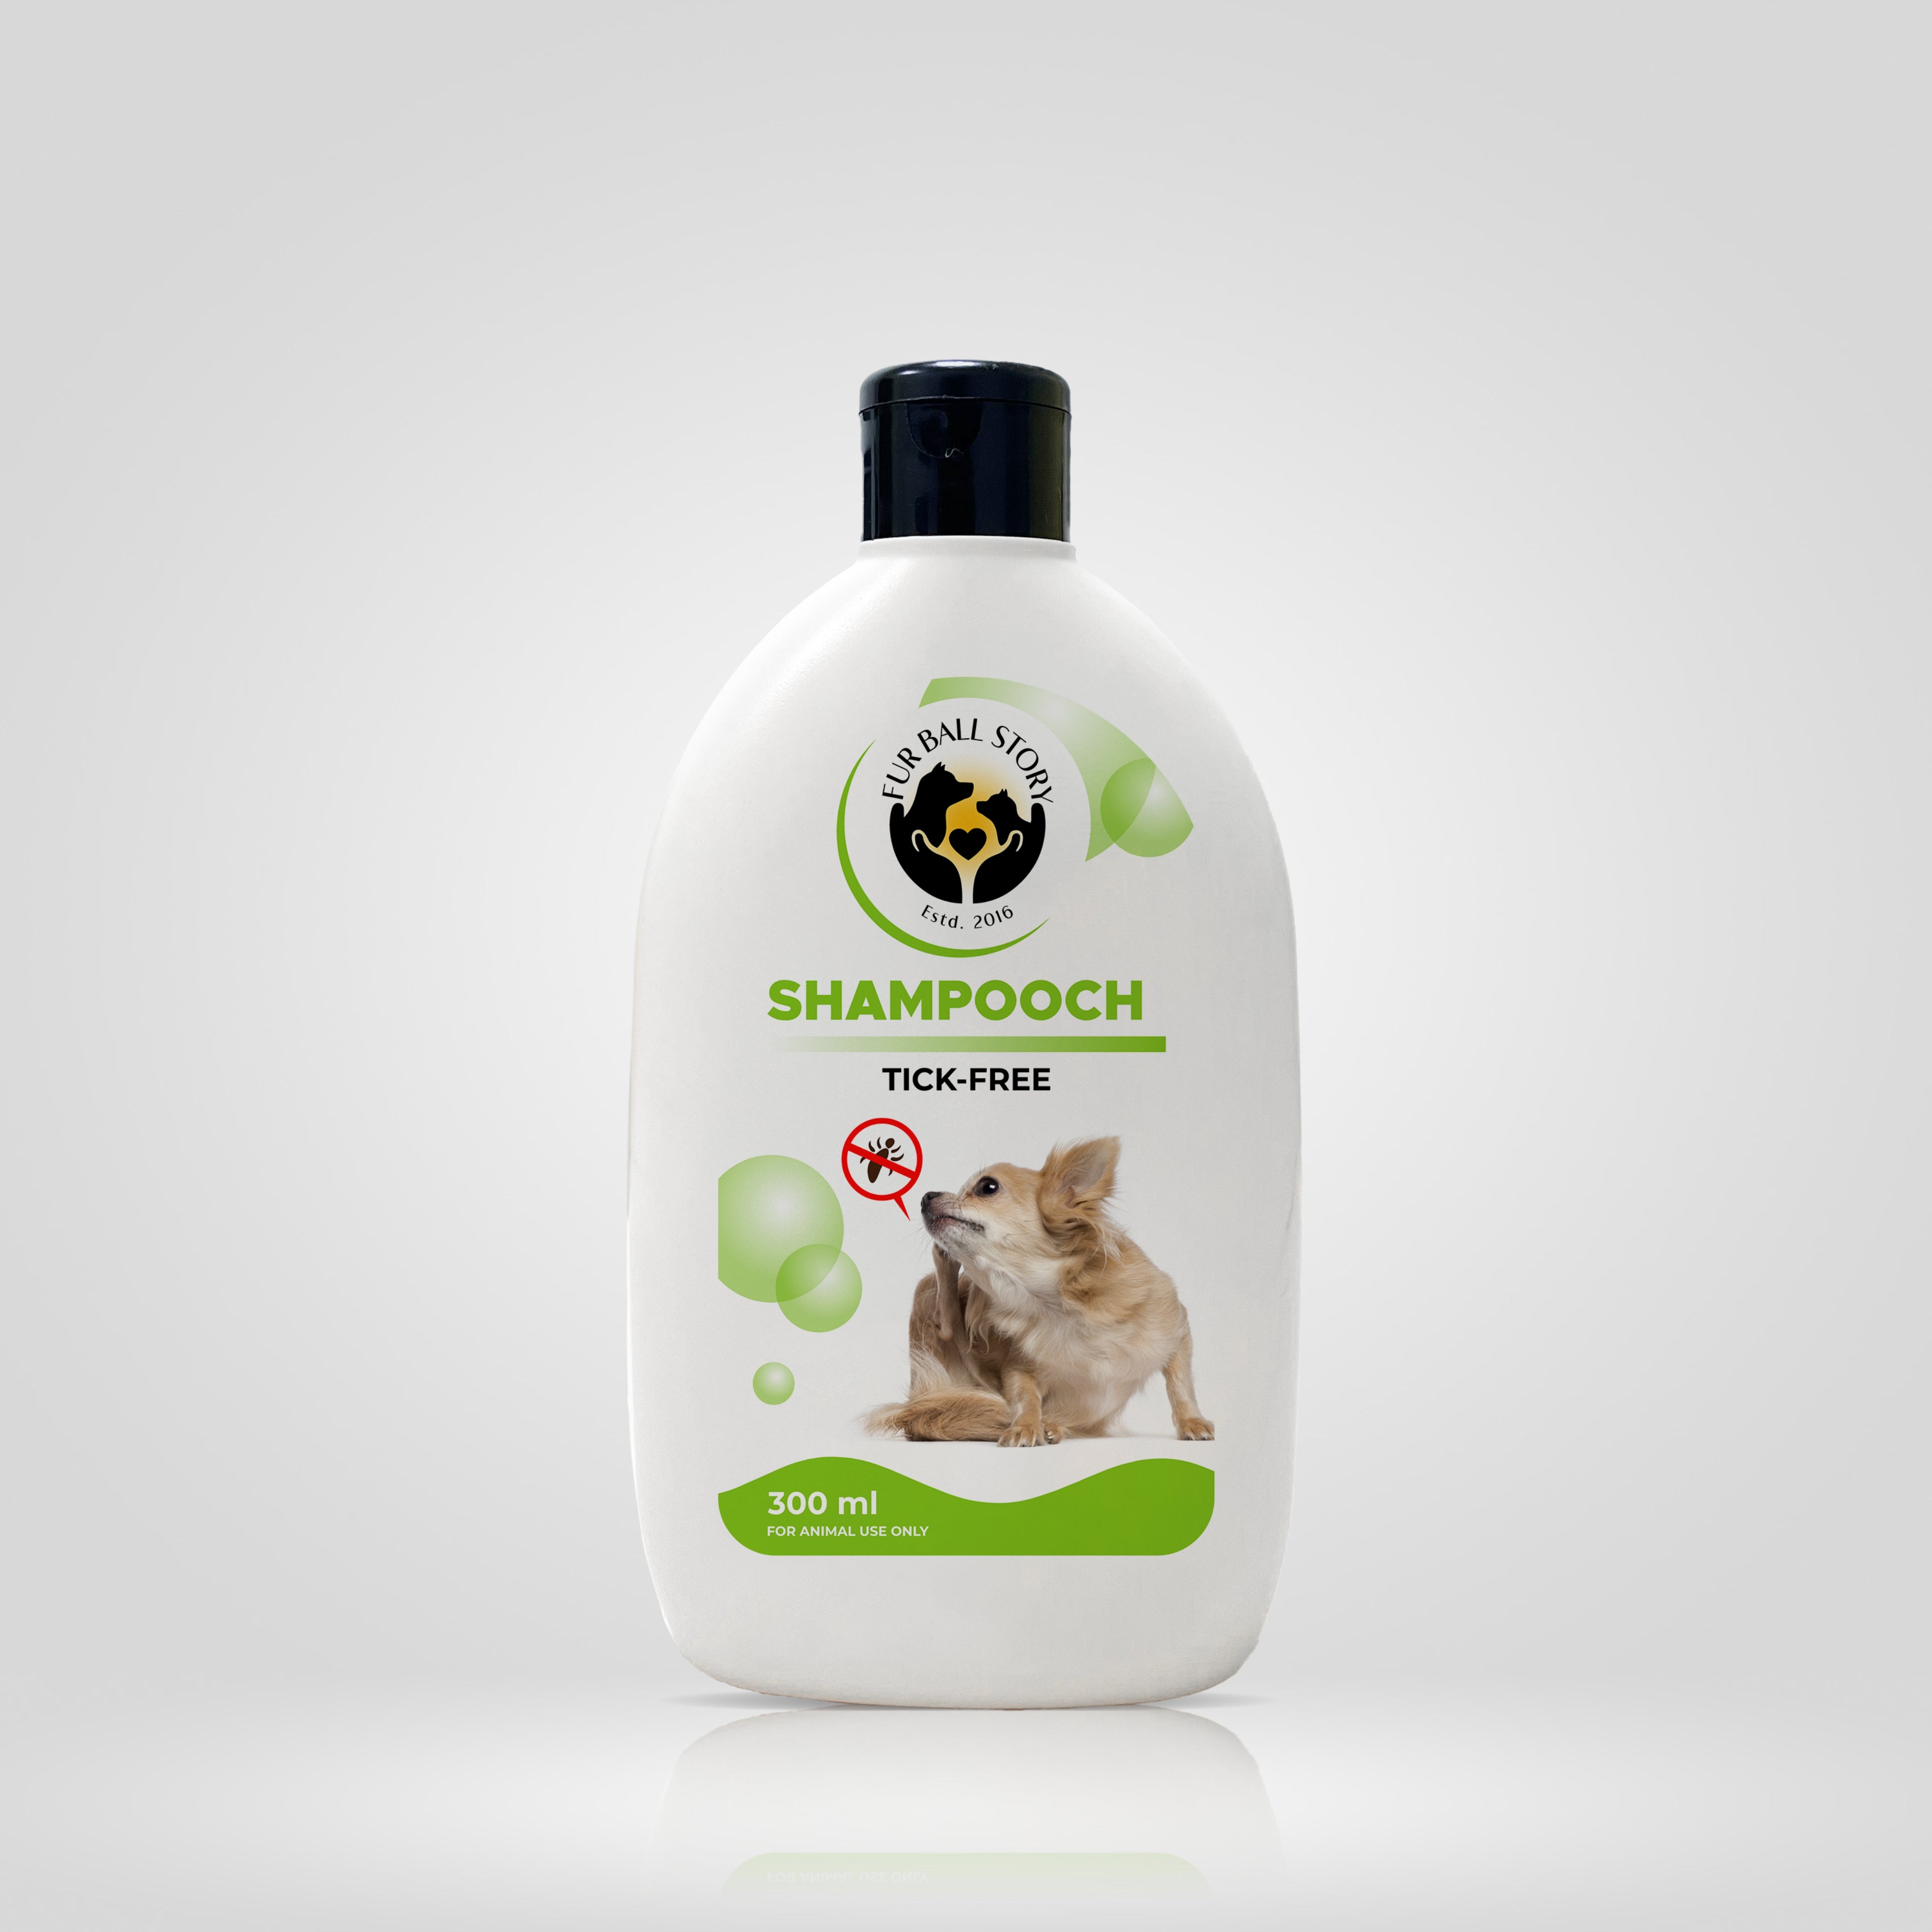 Shampooch Tick Free: Tick Preventive Shampoo For Dogs 